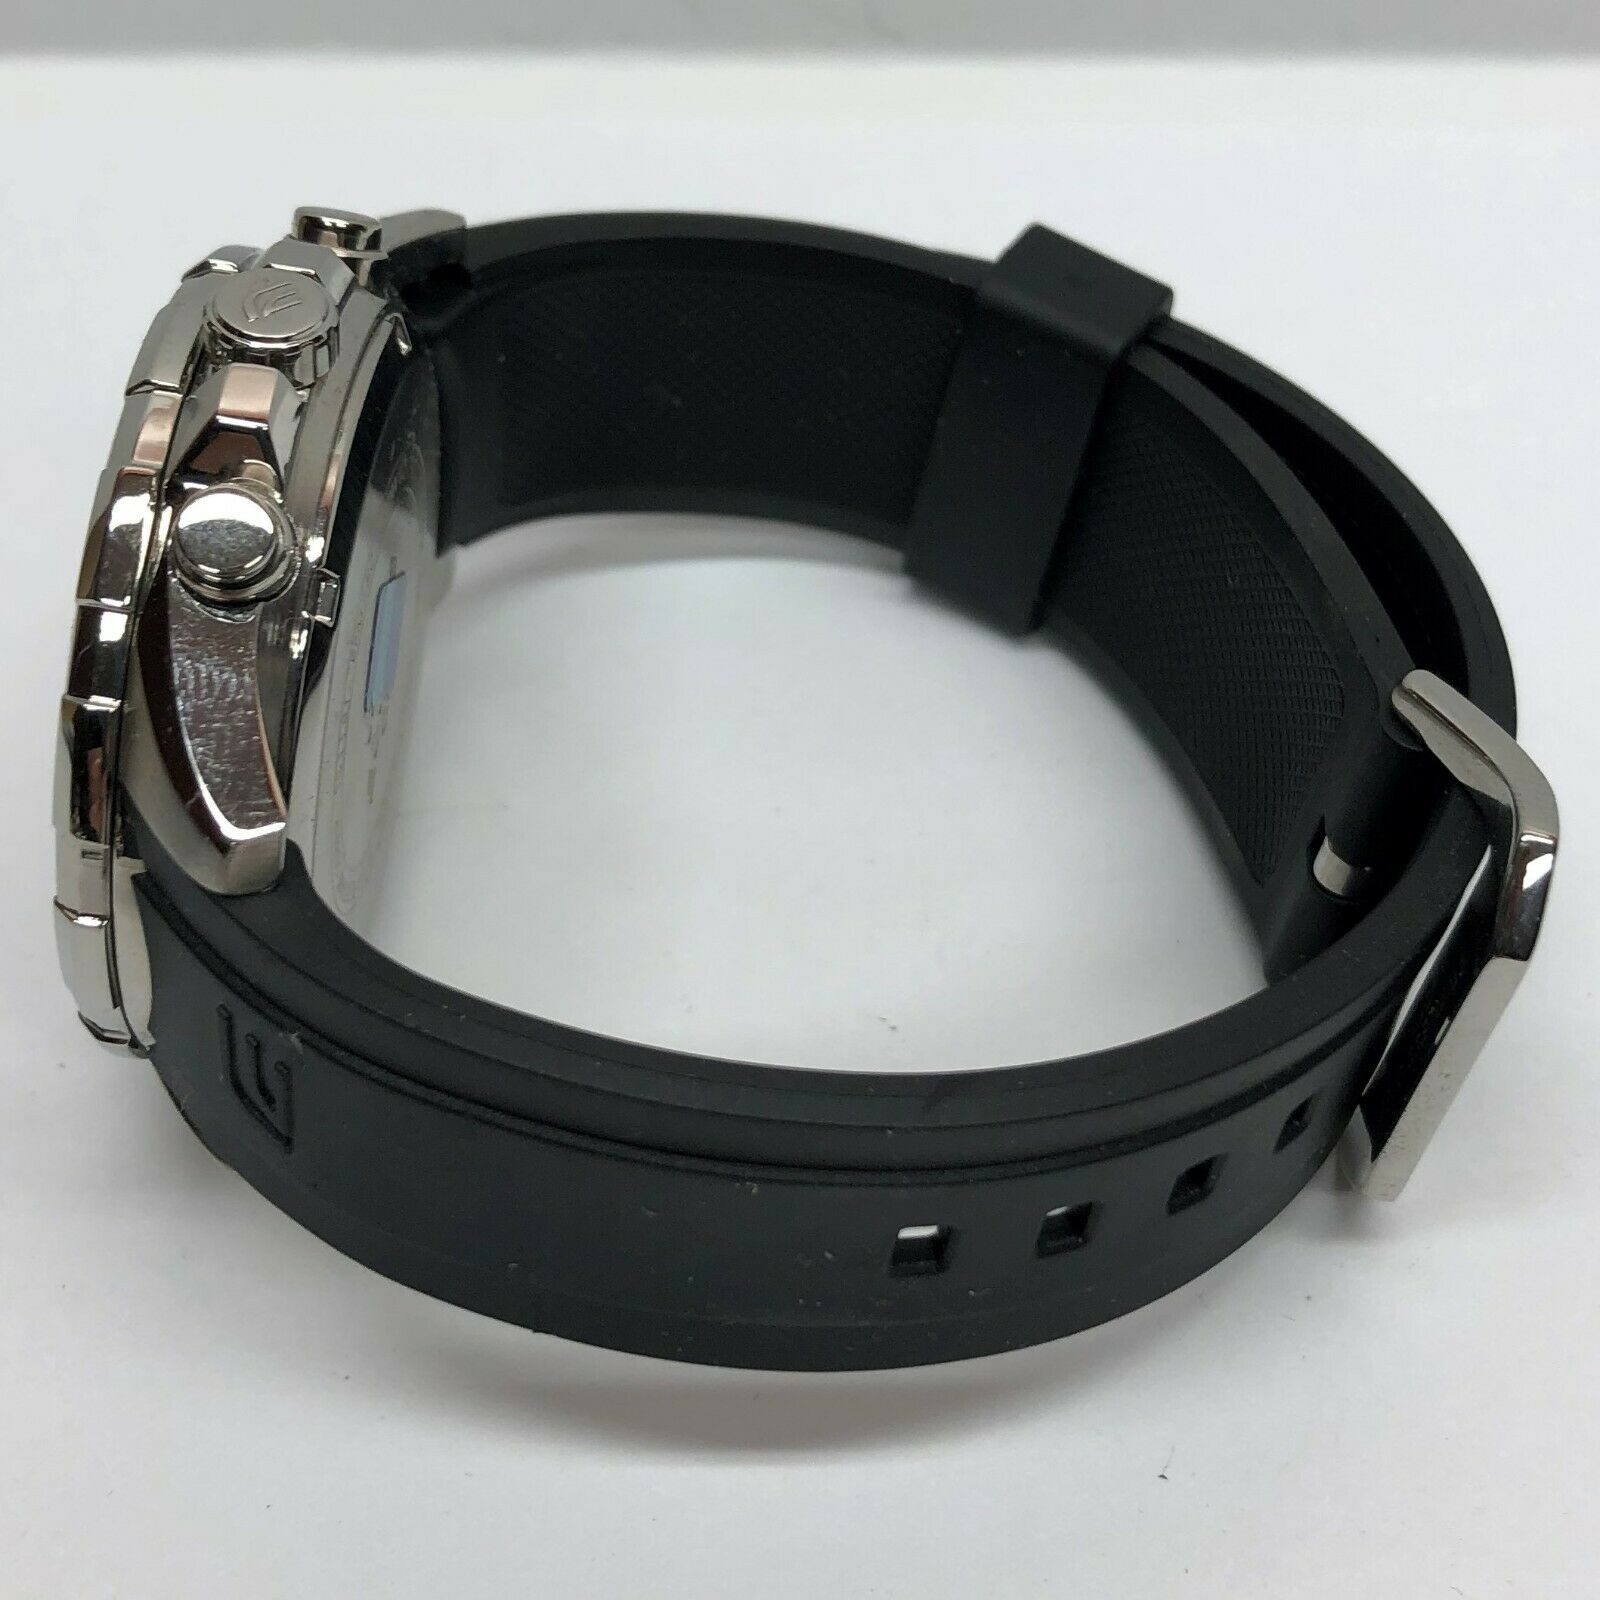 Casio Edifice 200M Diver Watch EFM-501-1A2VCF - Mill Watches